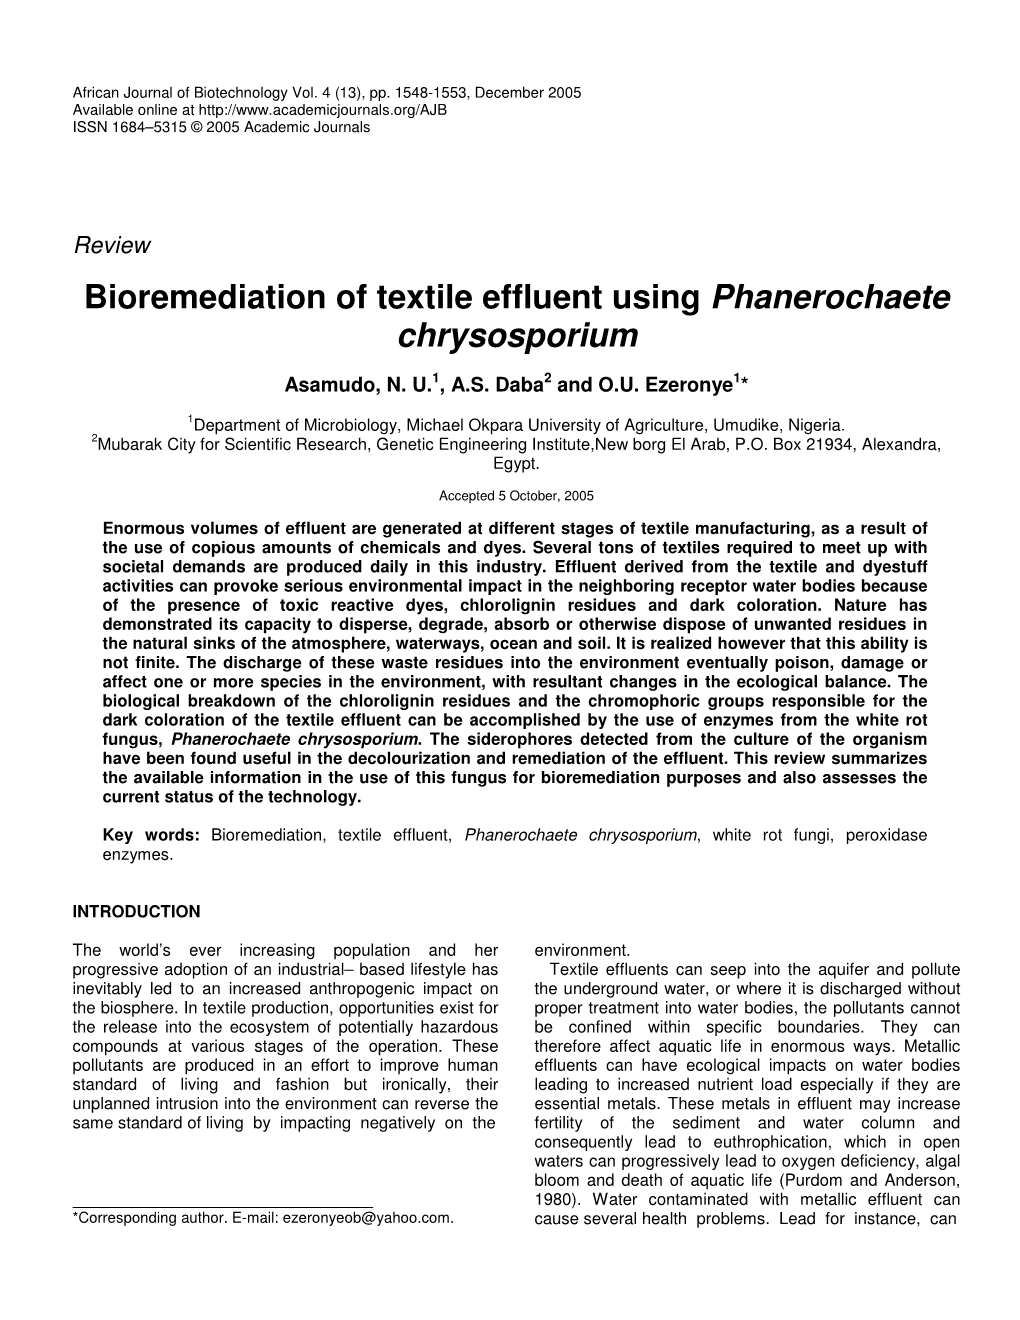 Bioremediation of Textile Effluent Using Phanerochaete Chrysosporium